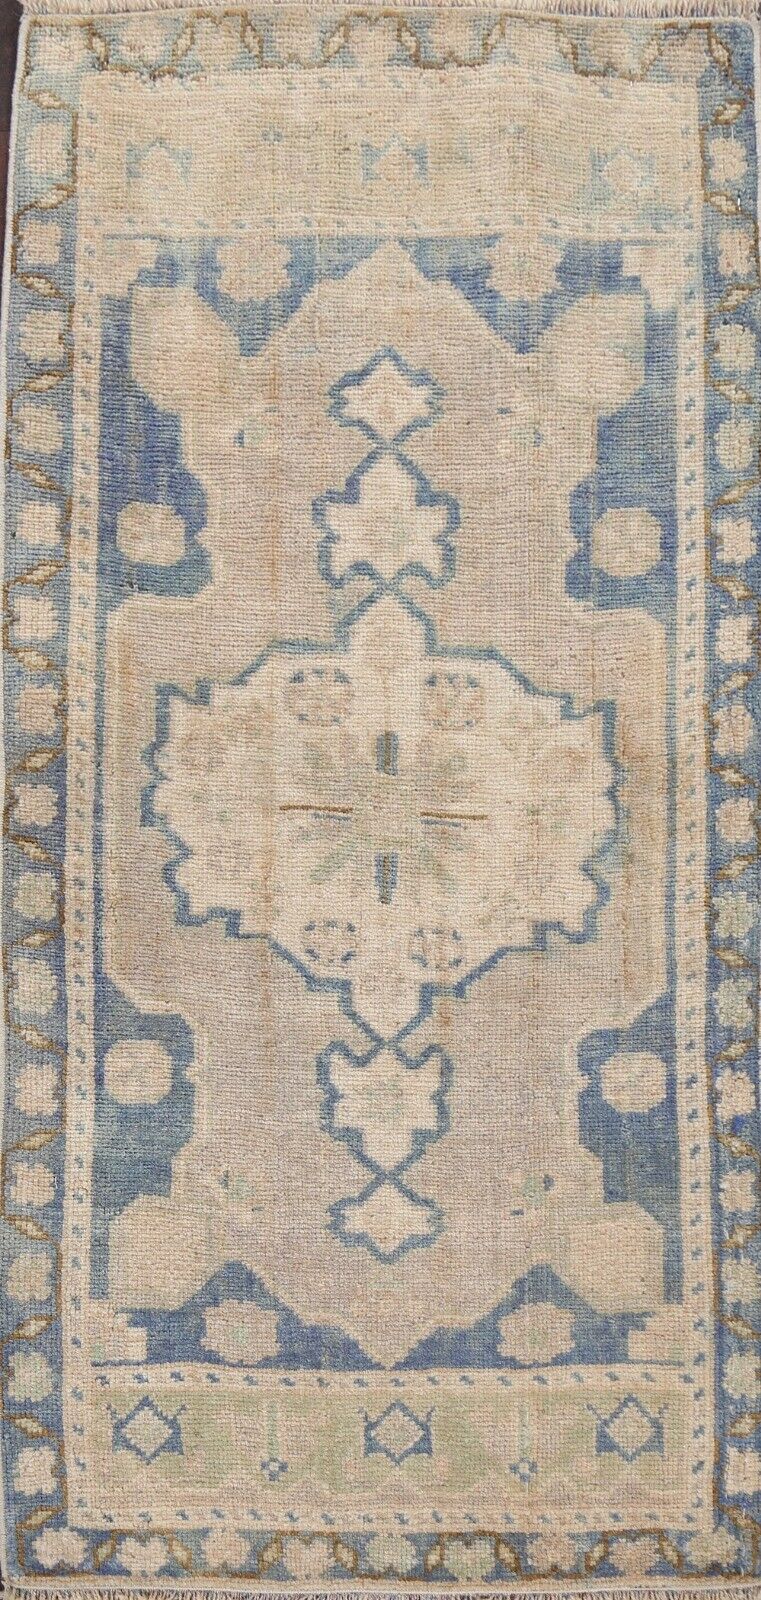 Vintage Geometric Oushak Turkish Oriental Area Rug Hand-knotted Wool Carpet 2x4